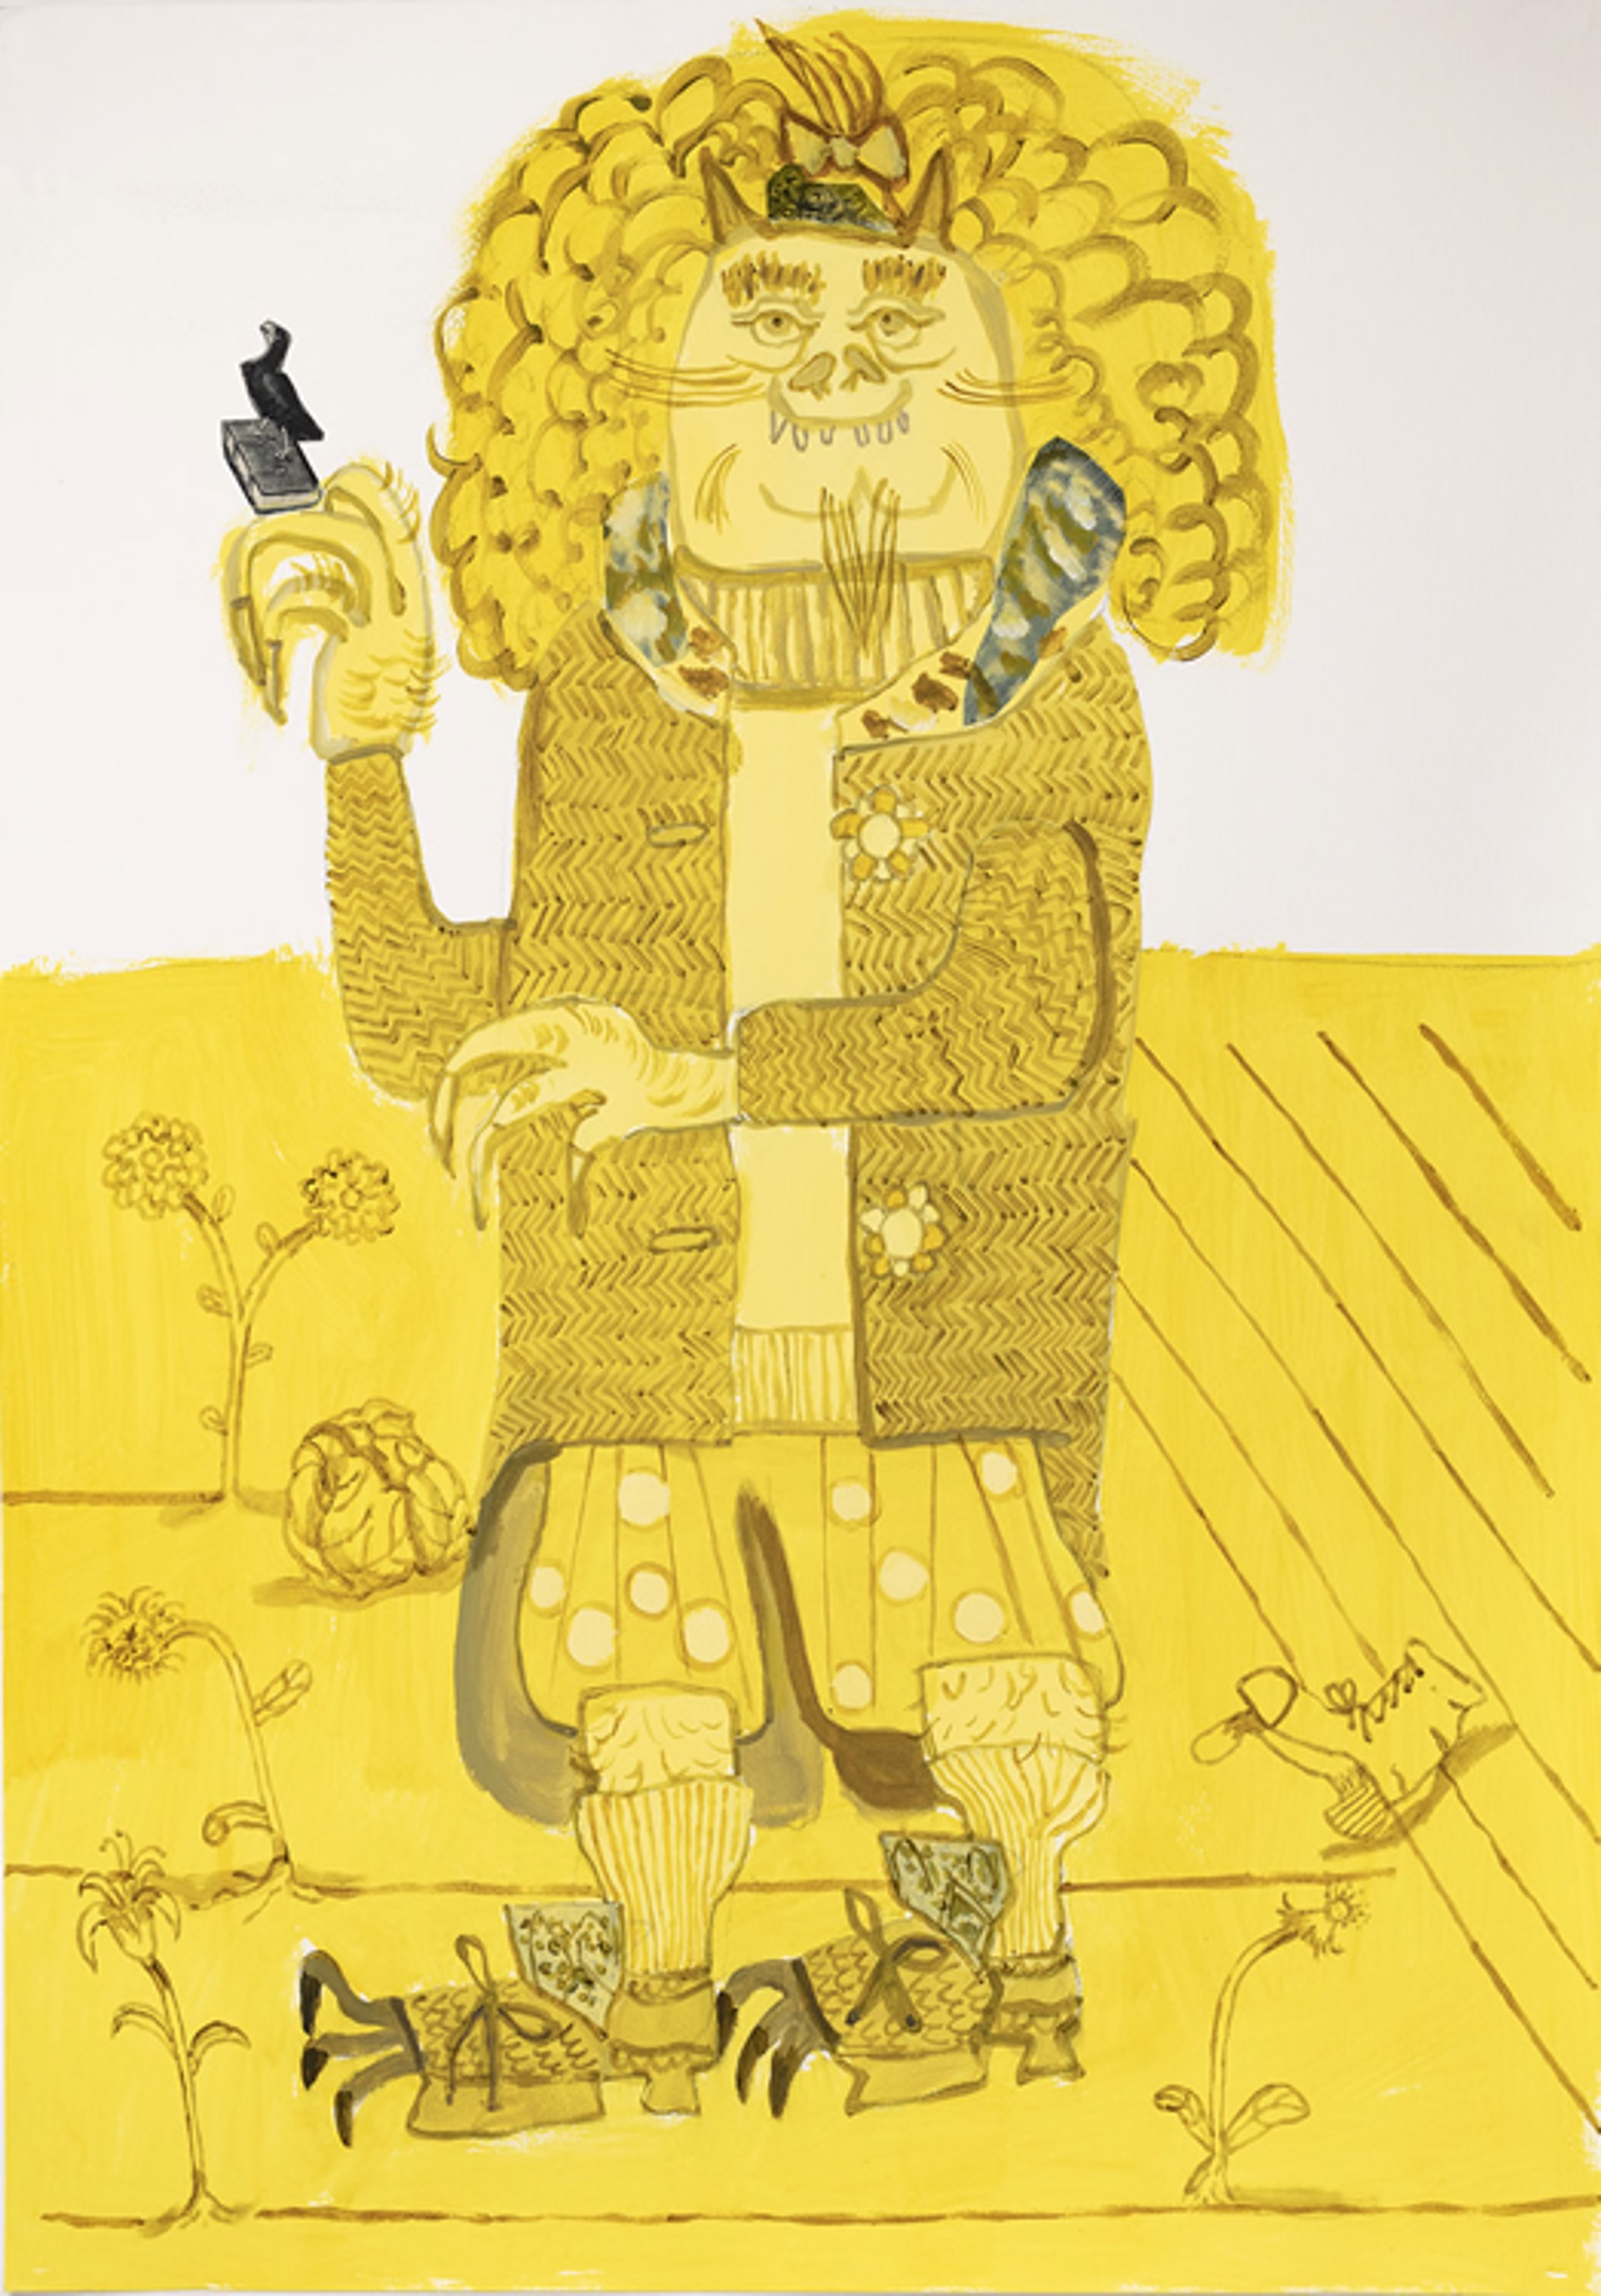 Yellow Tweed by Hannah Barrett